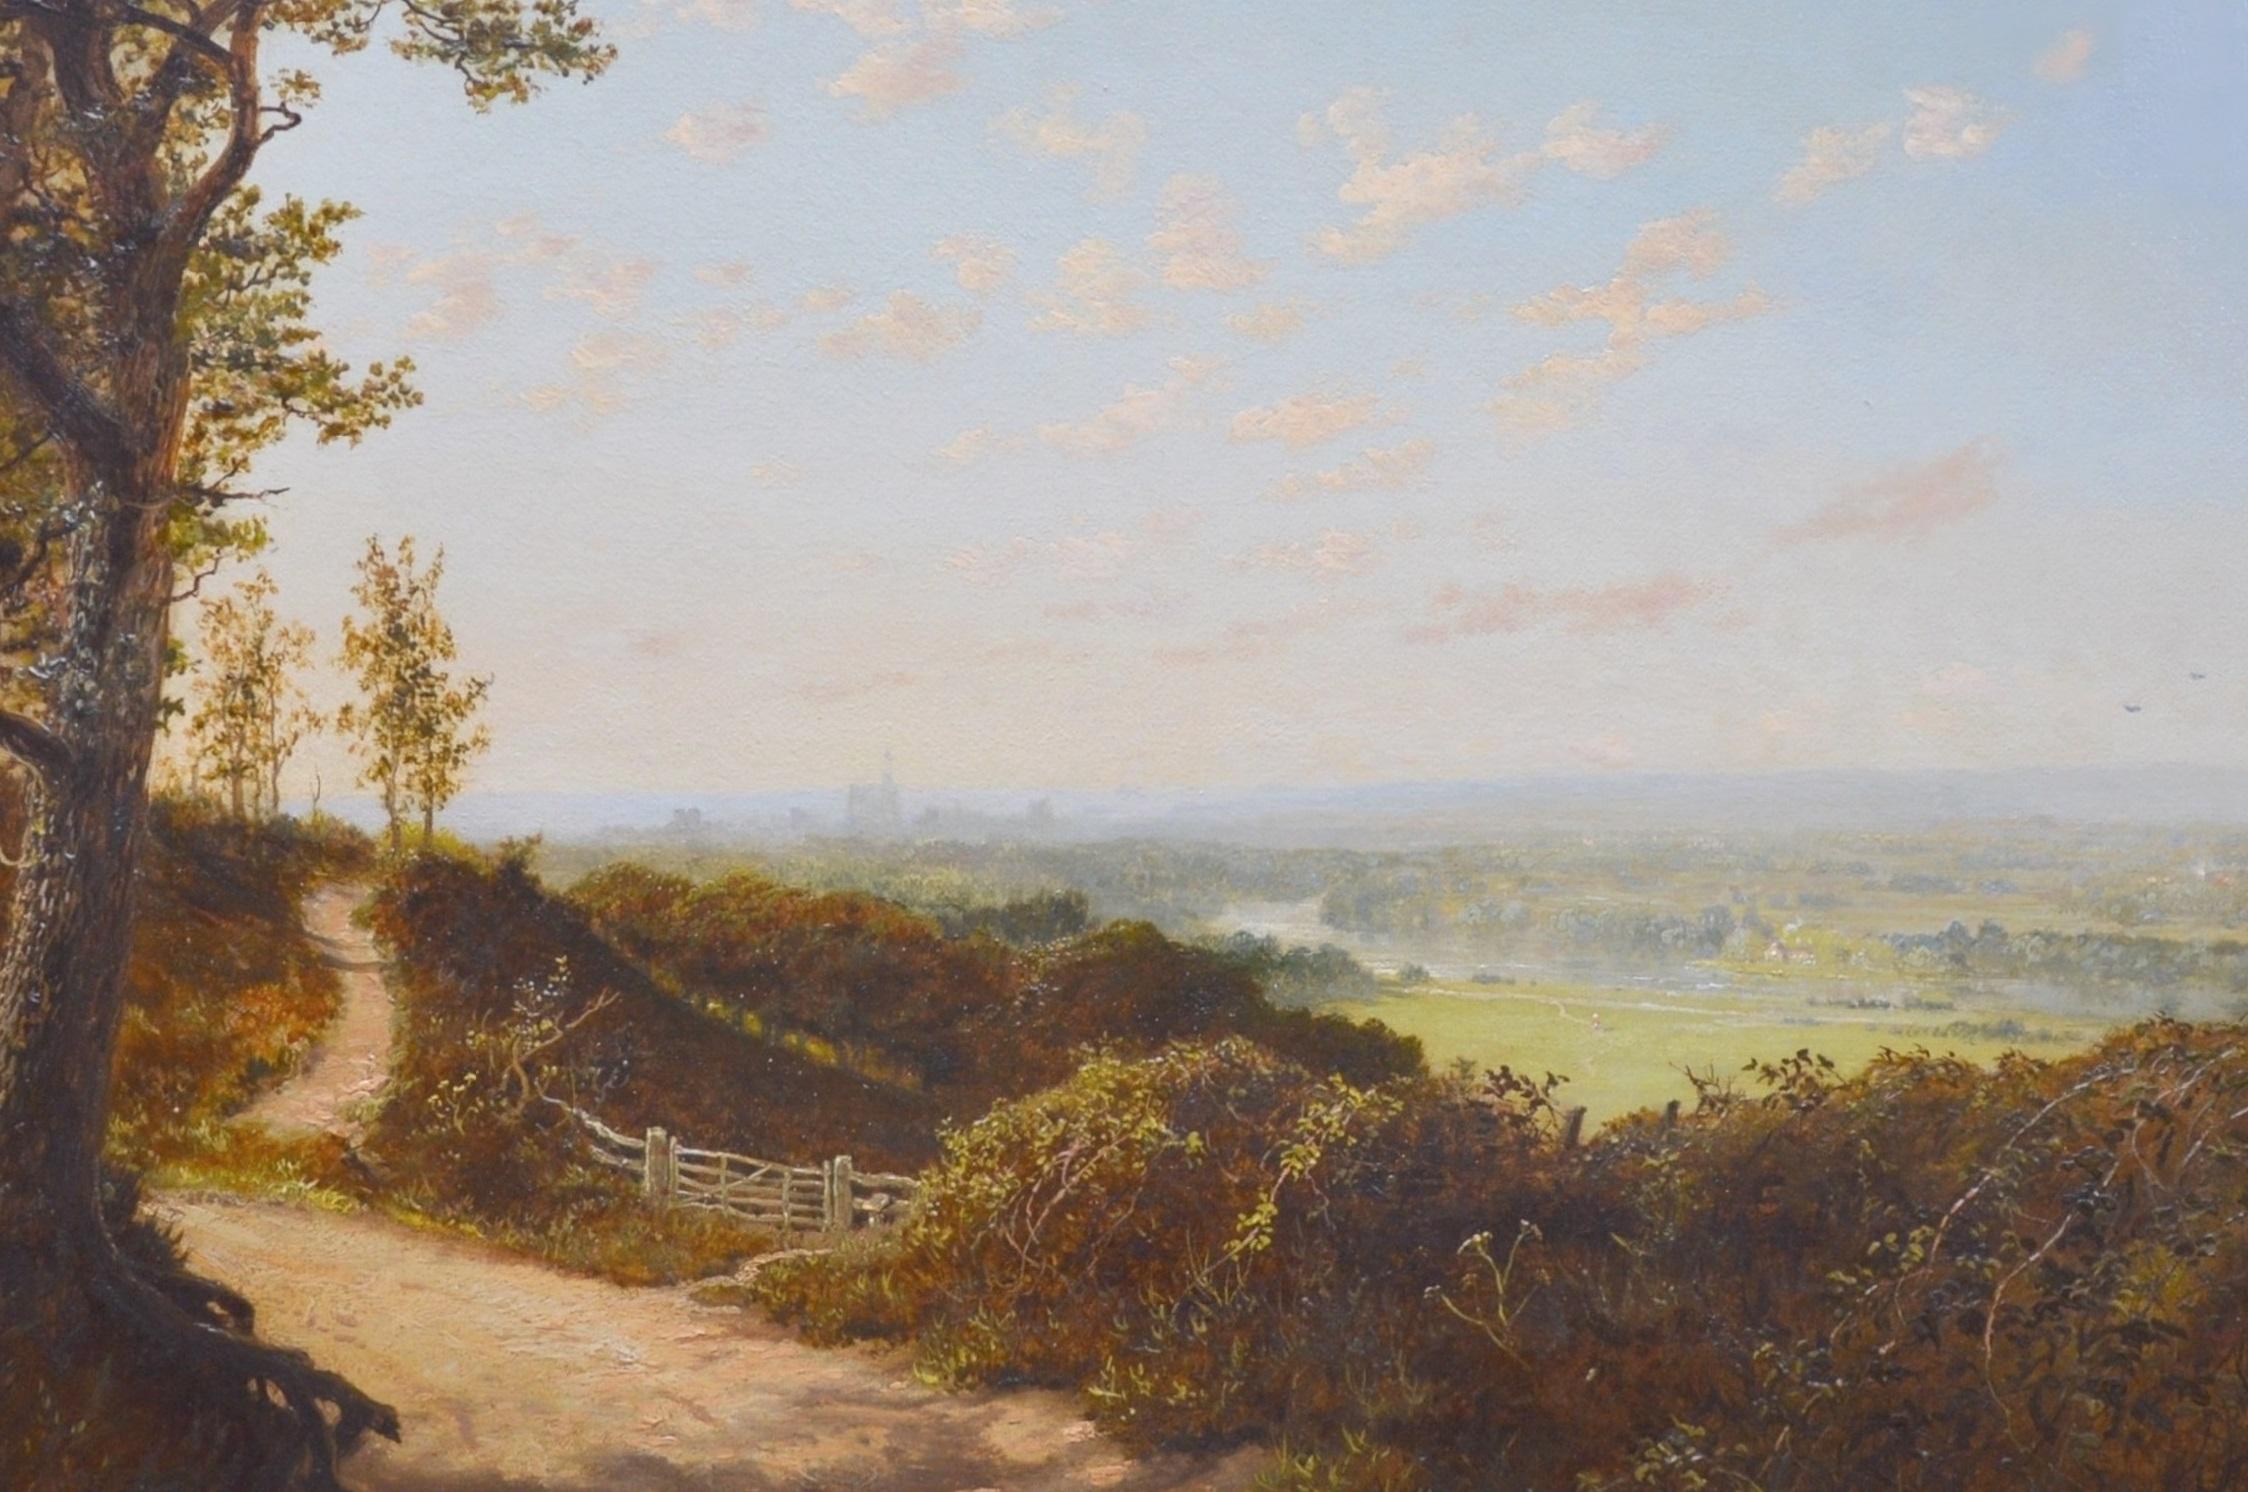 River Thames near Windsor - 19th Century Landscape Oil Painting of Royal Castle 1